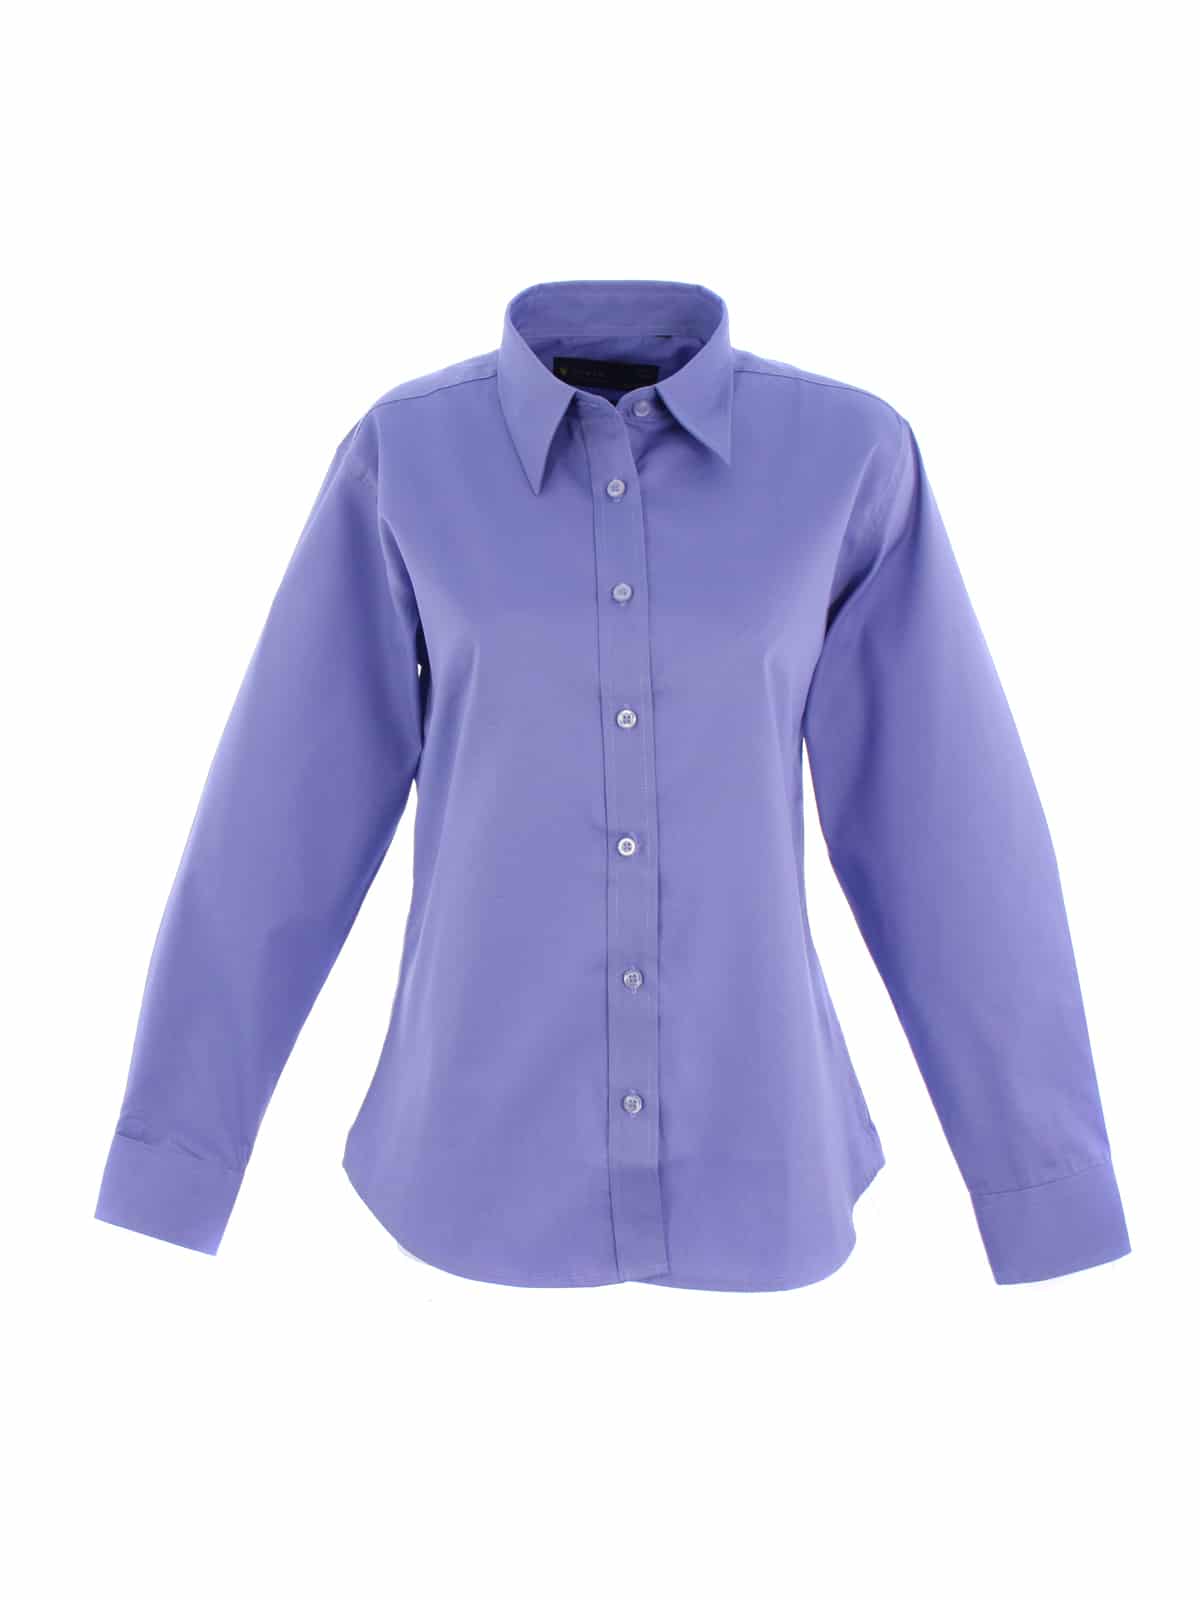 Uneek Ladies Pinpoint Oxford Full Sleeve Shirt